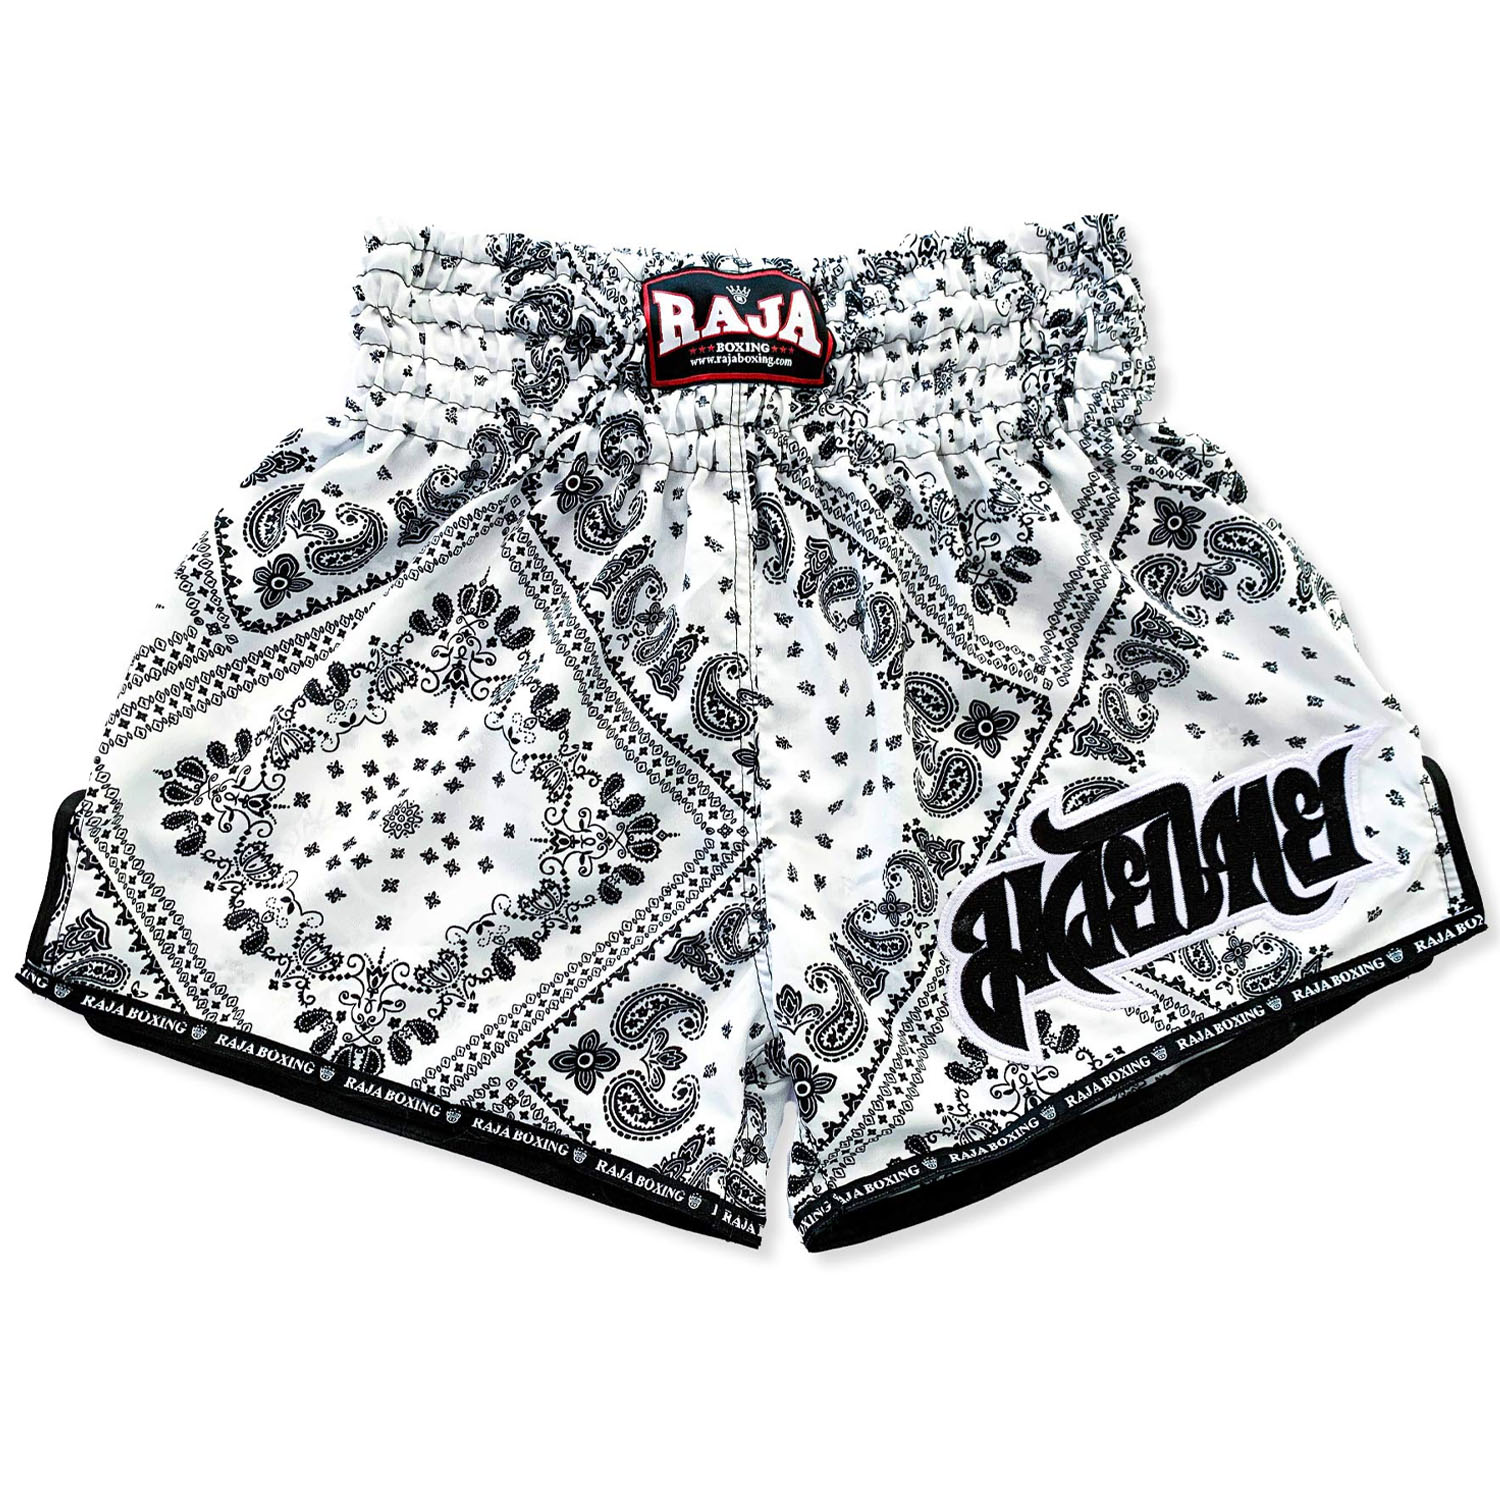 RAJA Boxing Muay Thai Shorts, SP65 038, weiß-schwarz